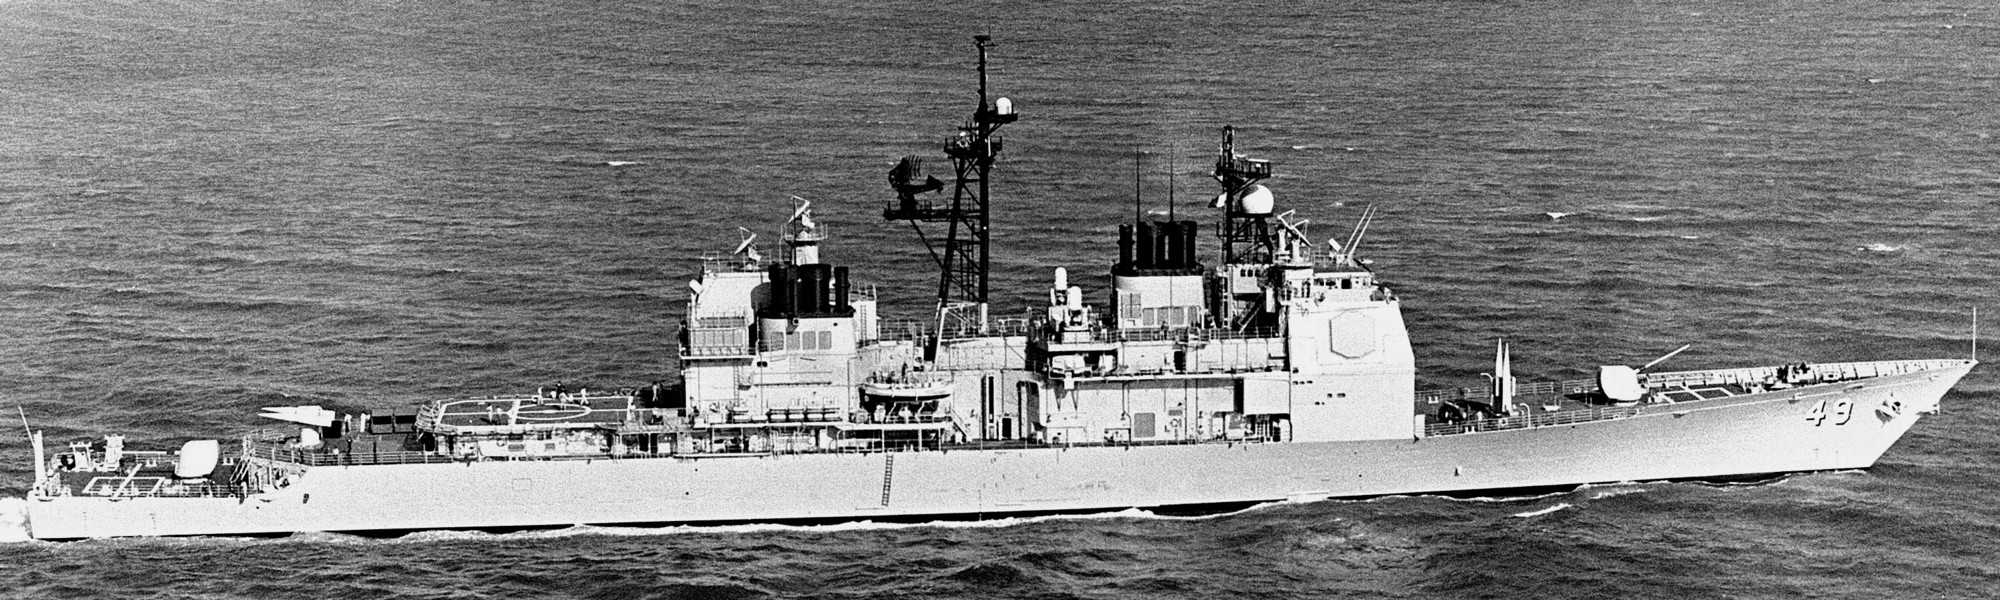 cg-49 uss vincennes ticonderoga class guided missile cruiser aegis us navy 39